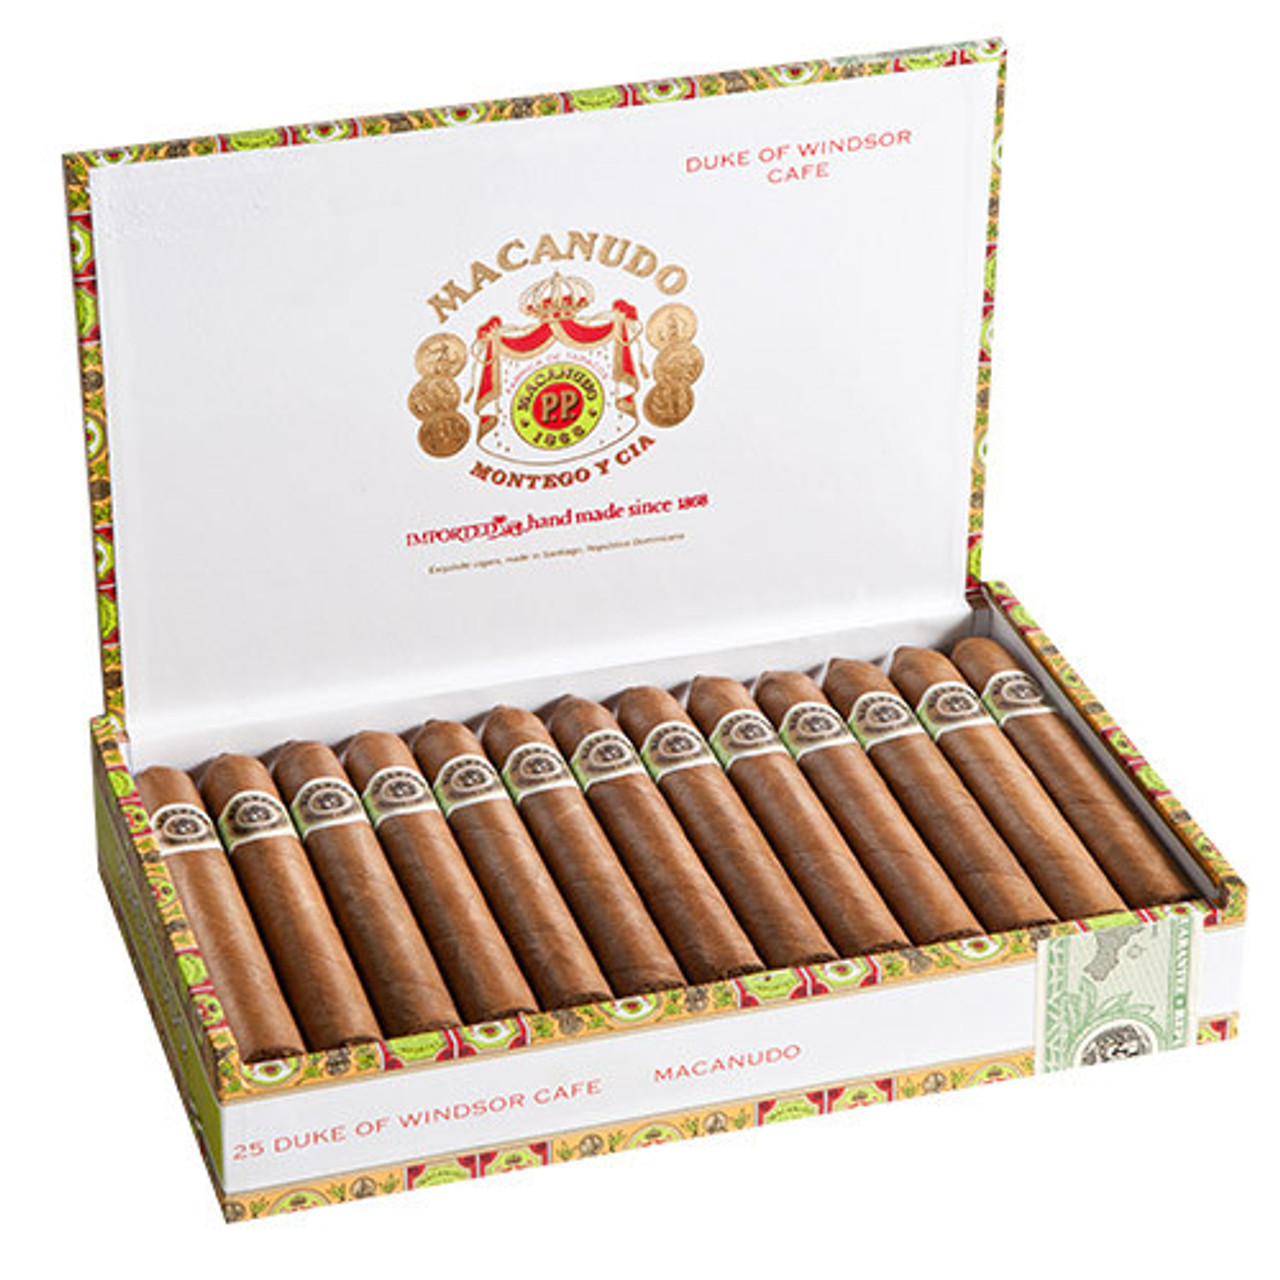 Macanudo Hampton Court Tubed Cigars - 5 x 43 (Box of 25) *Box